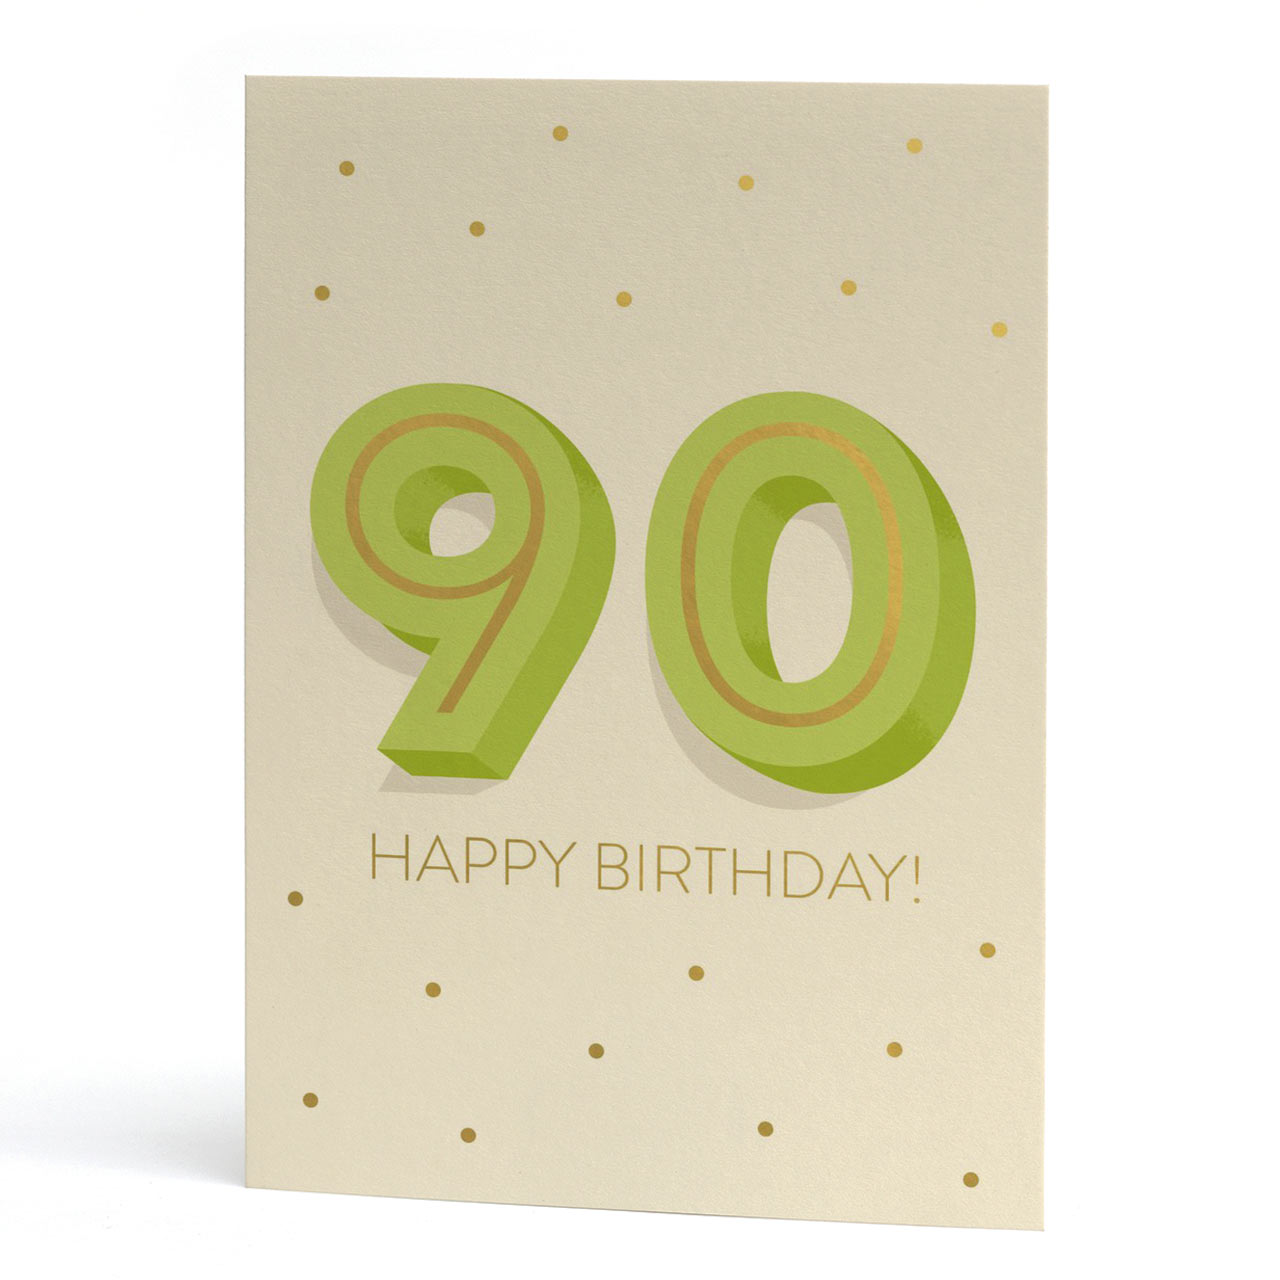 Big 90th Birthday Gold Foil Greeting Card